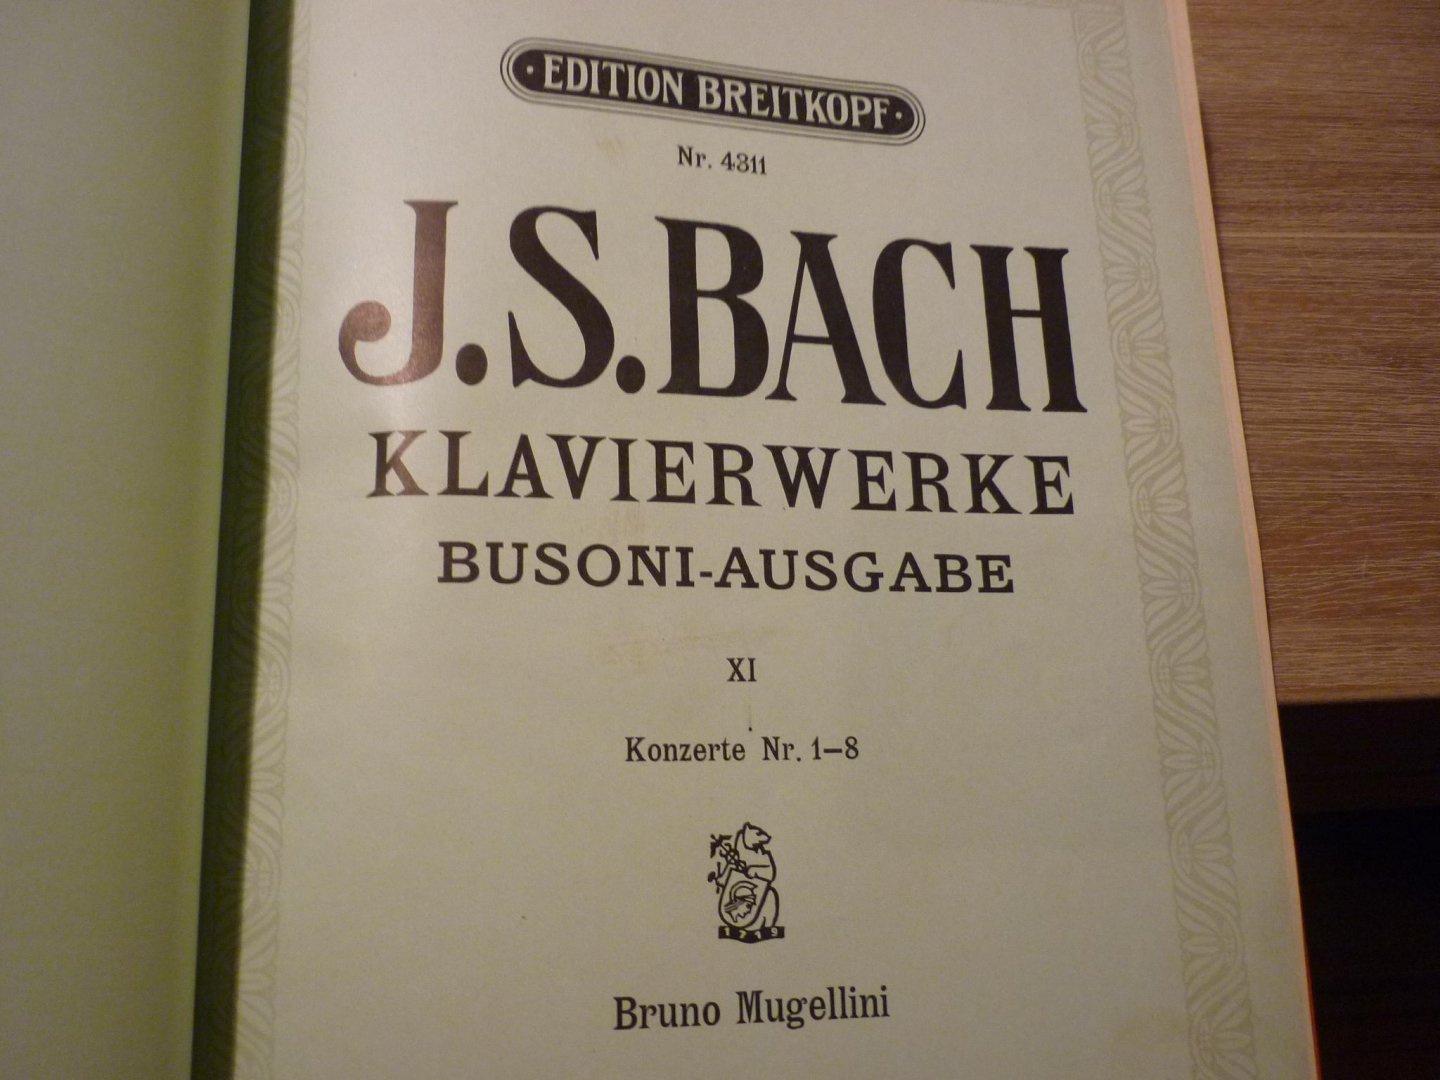 Bach; J. S. (1685-1750) - Konzerte nach verschiedenen Meistern 1-16; Busoni-Ausgabe - Band 11 en Band 12